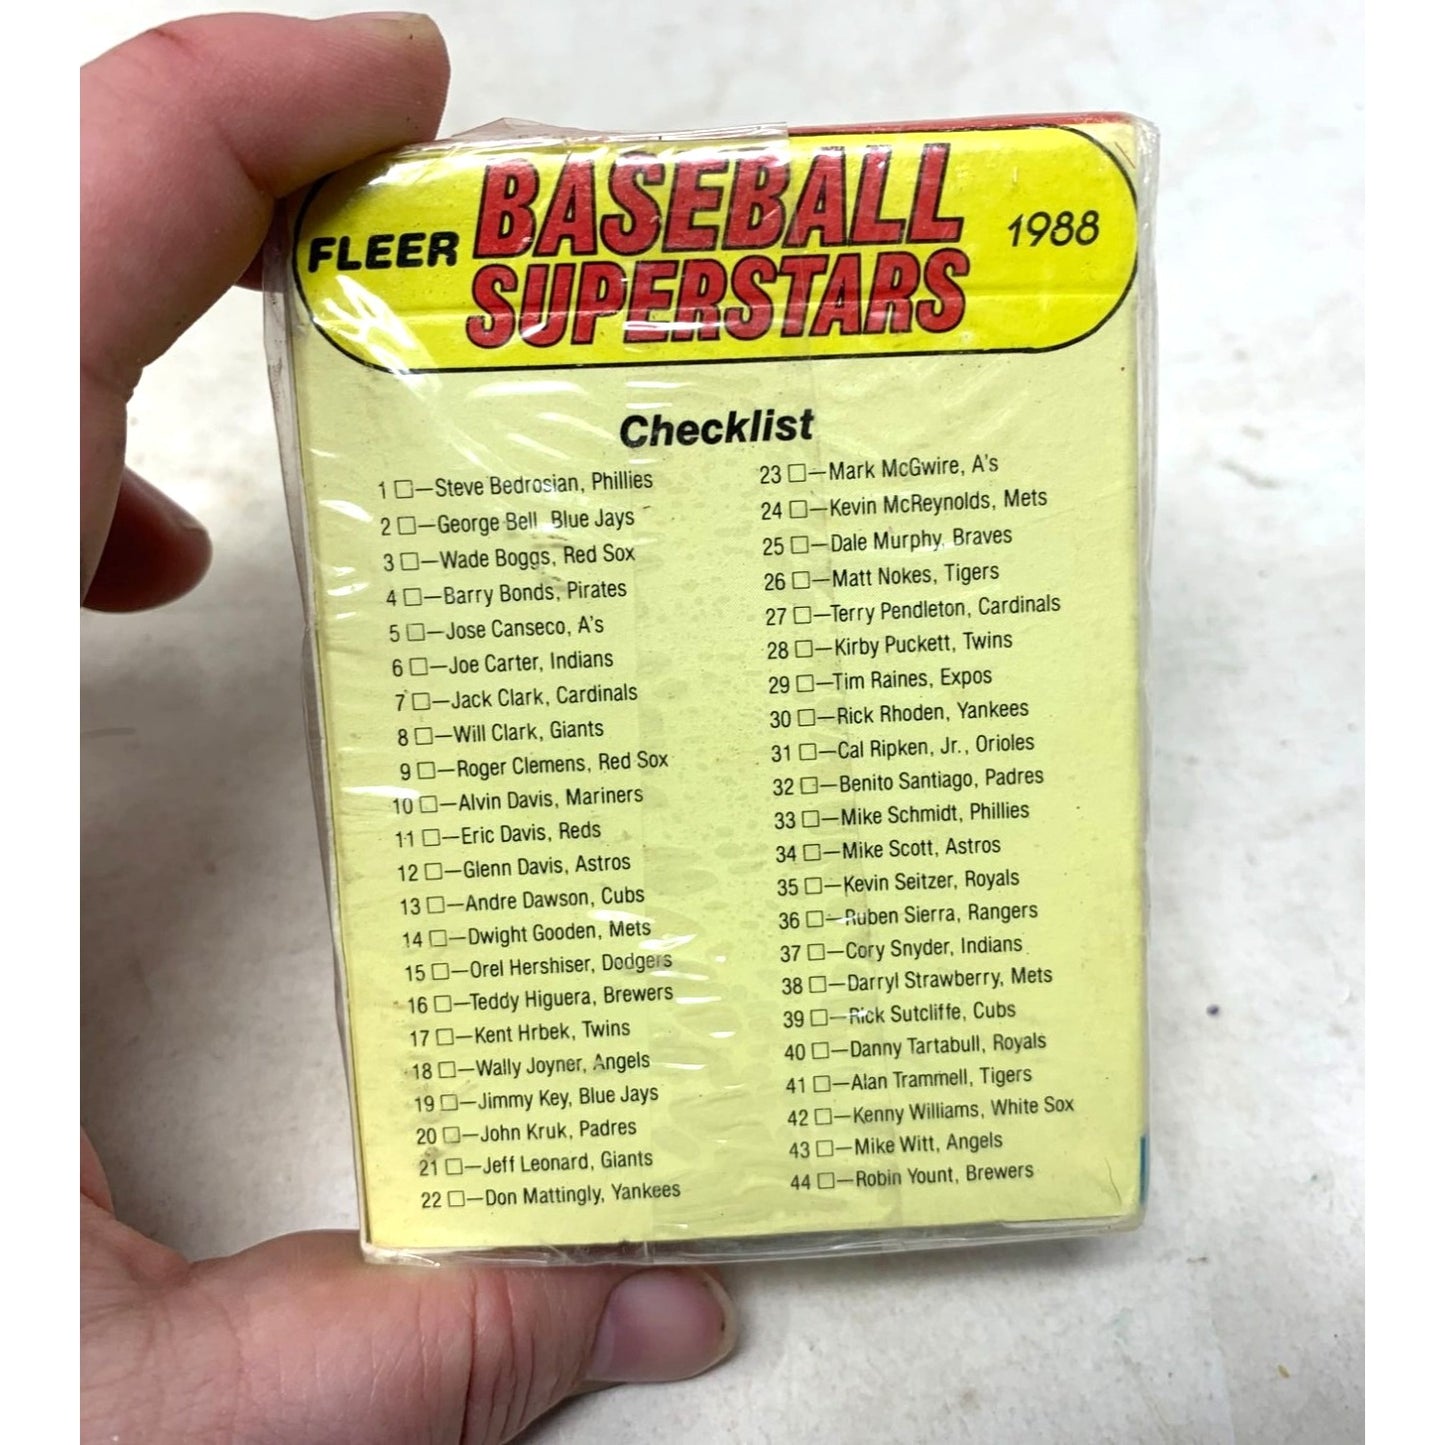 FLEER Baseball SUPERSTARS Logo Stickers & Trading Cards 1988 Limited Edition